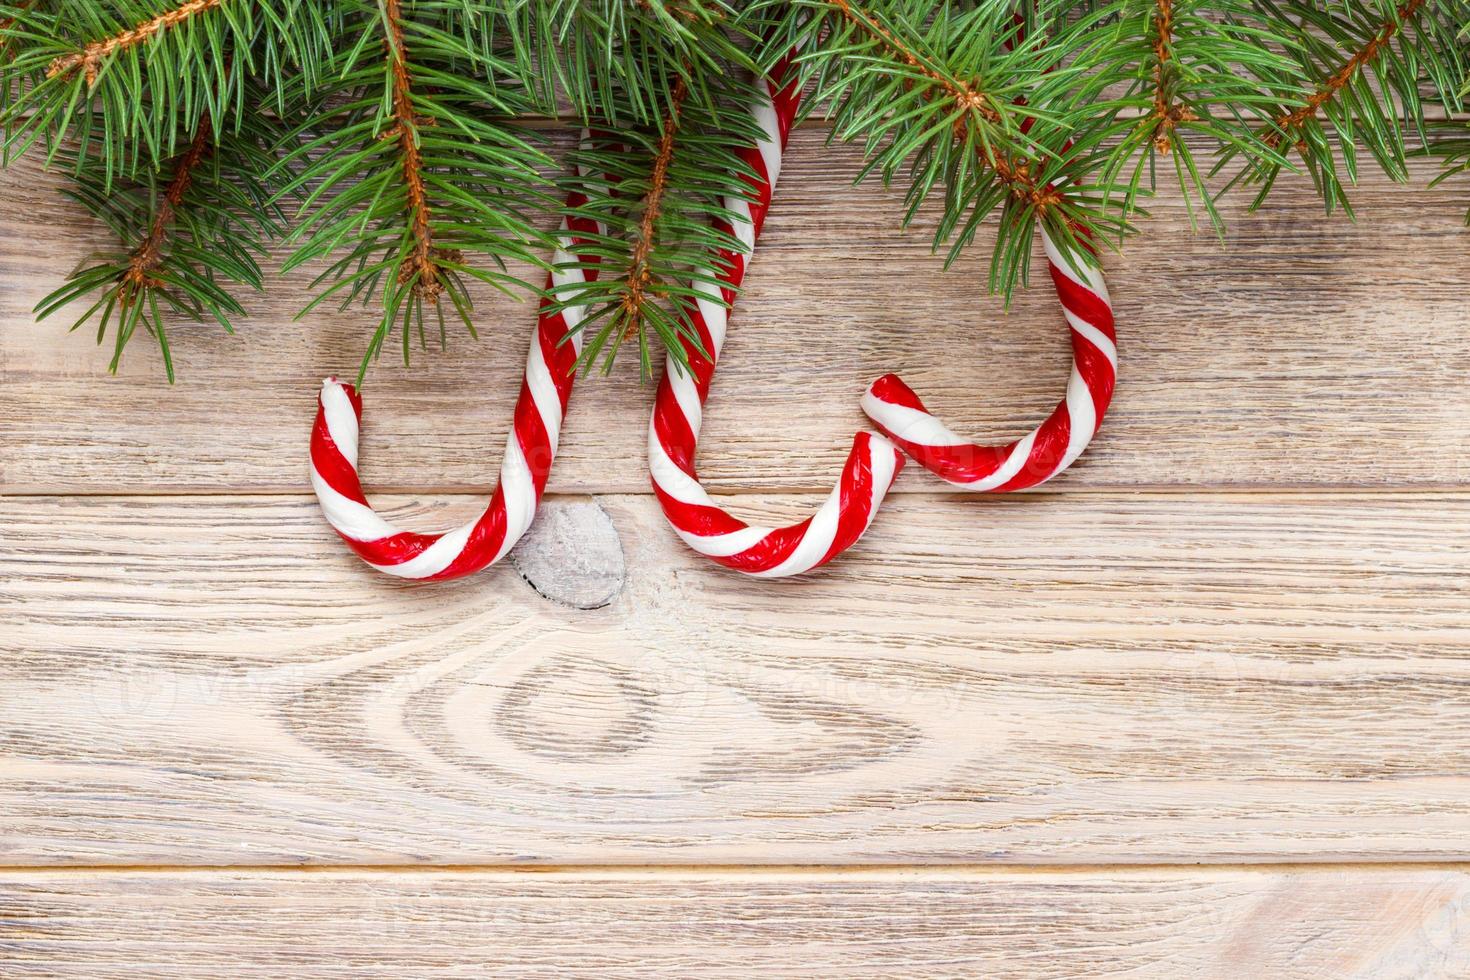 ramas de abeto de navidad con bastón de caramelo sobre fondo blanco de madera rústica con espacio para copiar texto foto